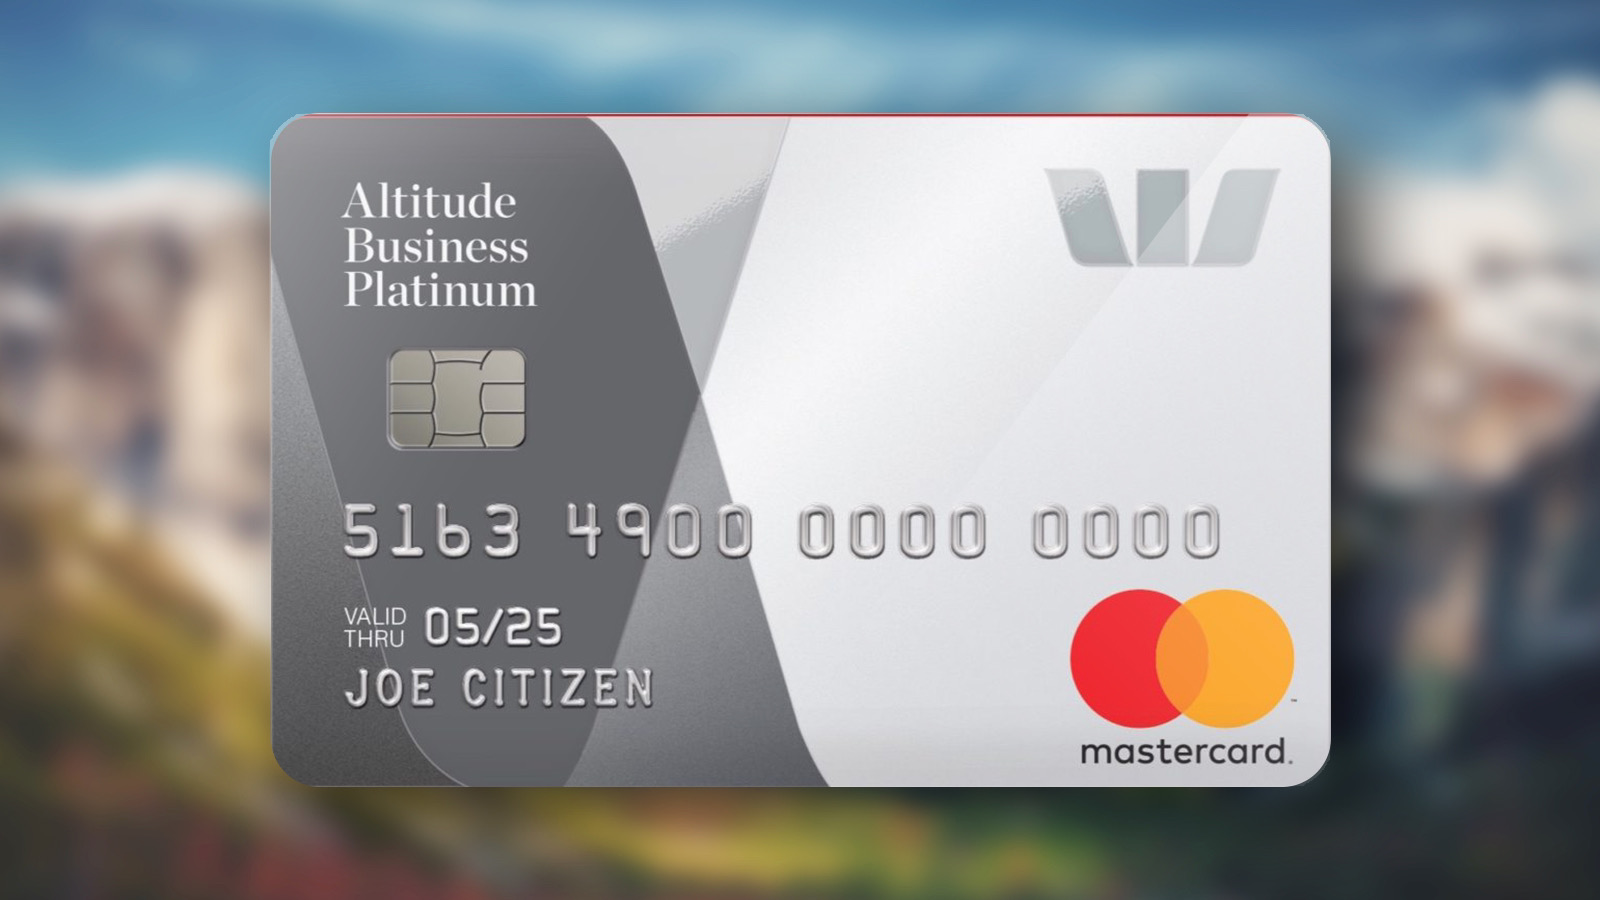 westpac-altitude-business-platinum-credit-card-point-hacks